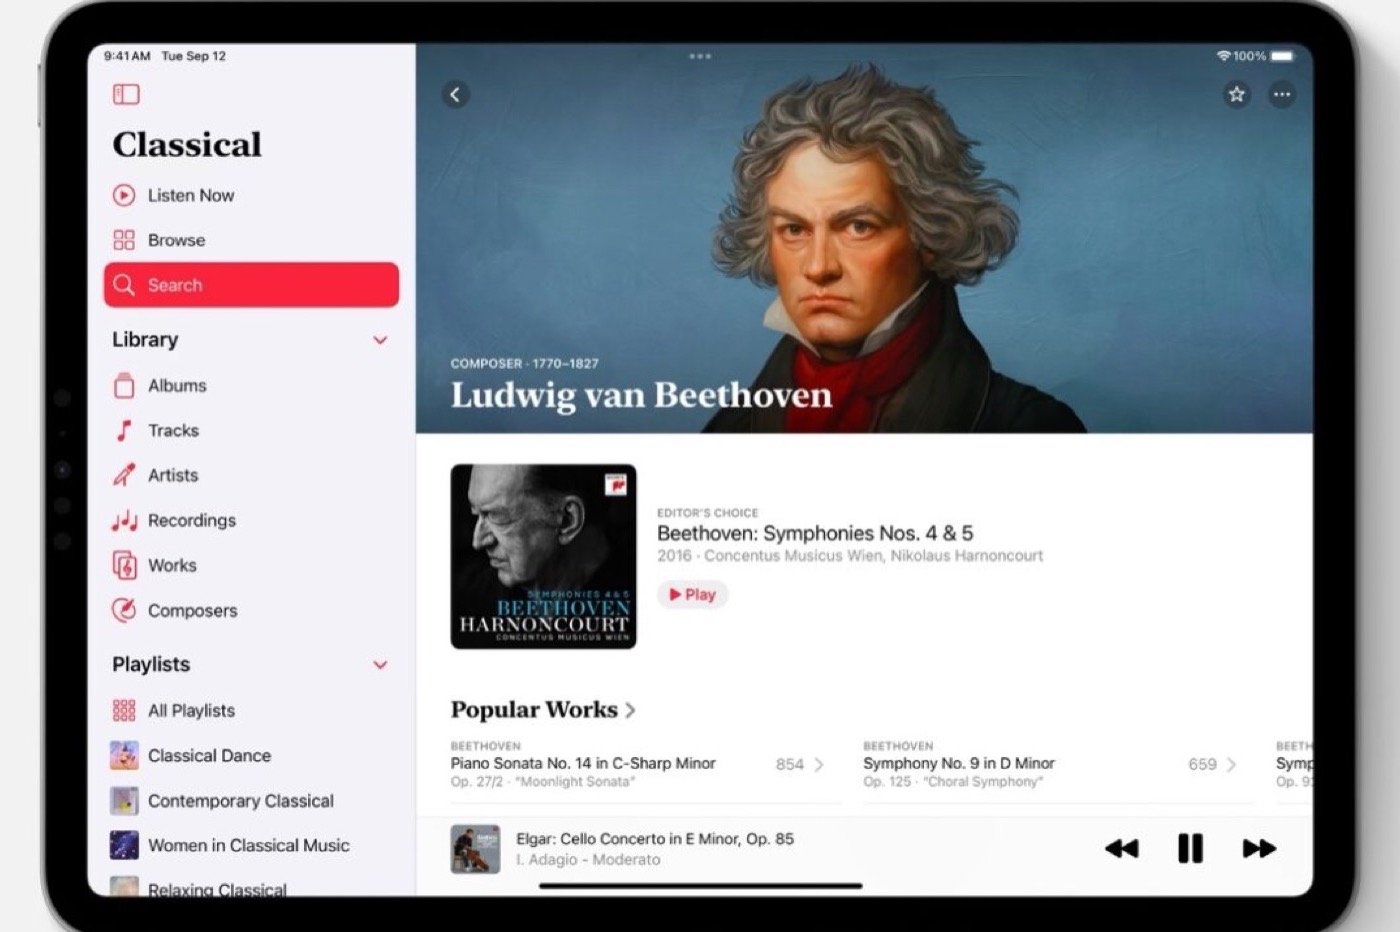 Apple music classical